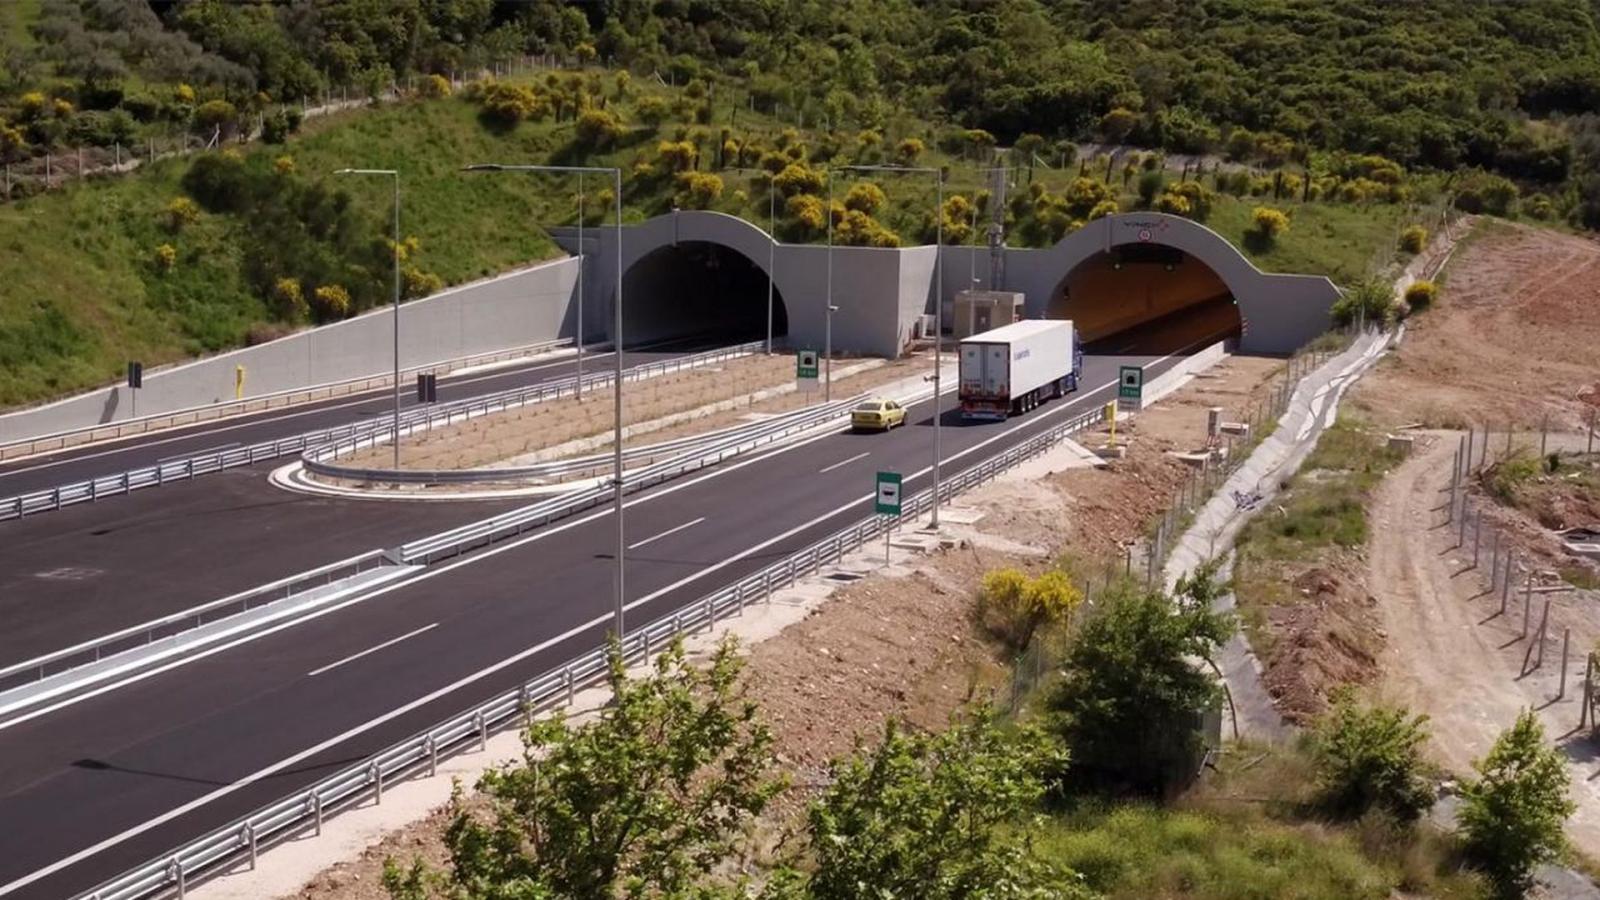 More information about "Τα μακρύτερα οδικά τούνελ στην Ελλάδα"